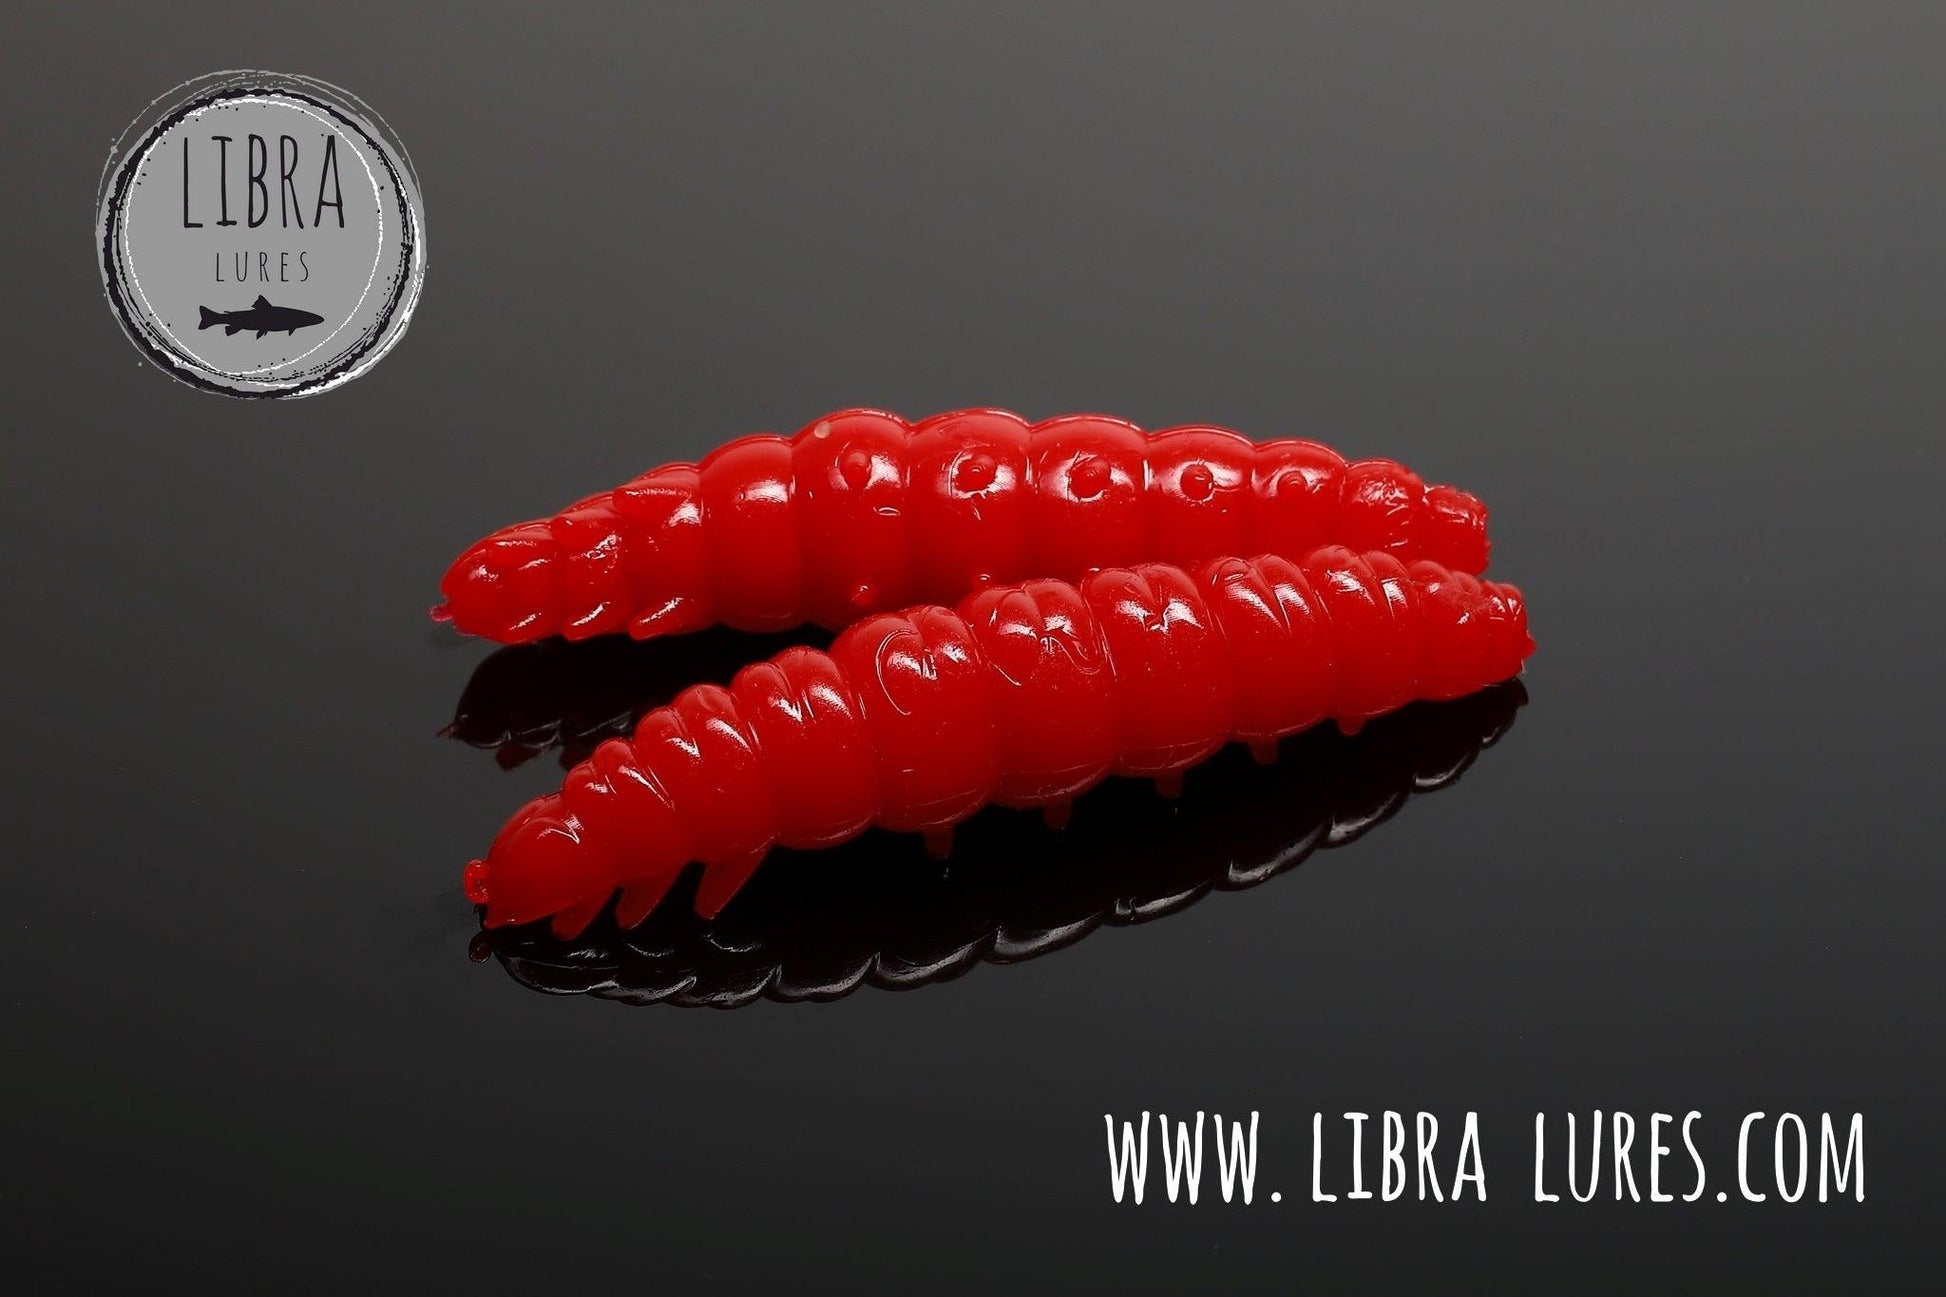 LIBRA LURES LARVA 35mm Aroma Käse / Knoblauch - SP-Fishing